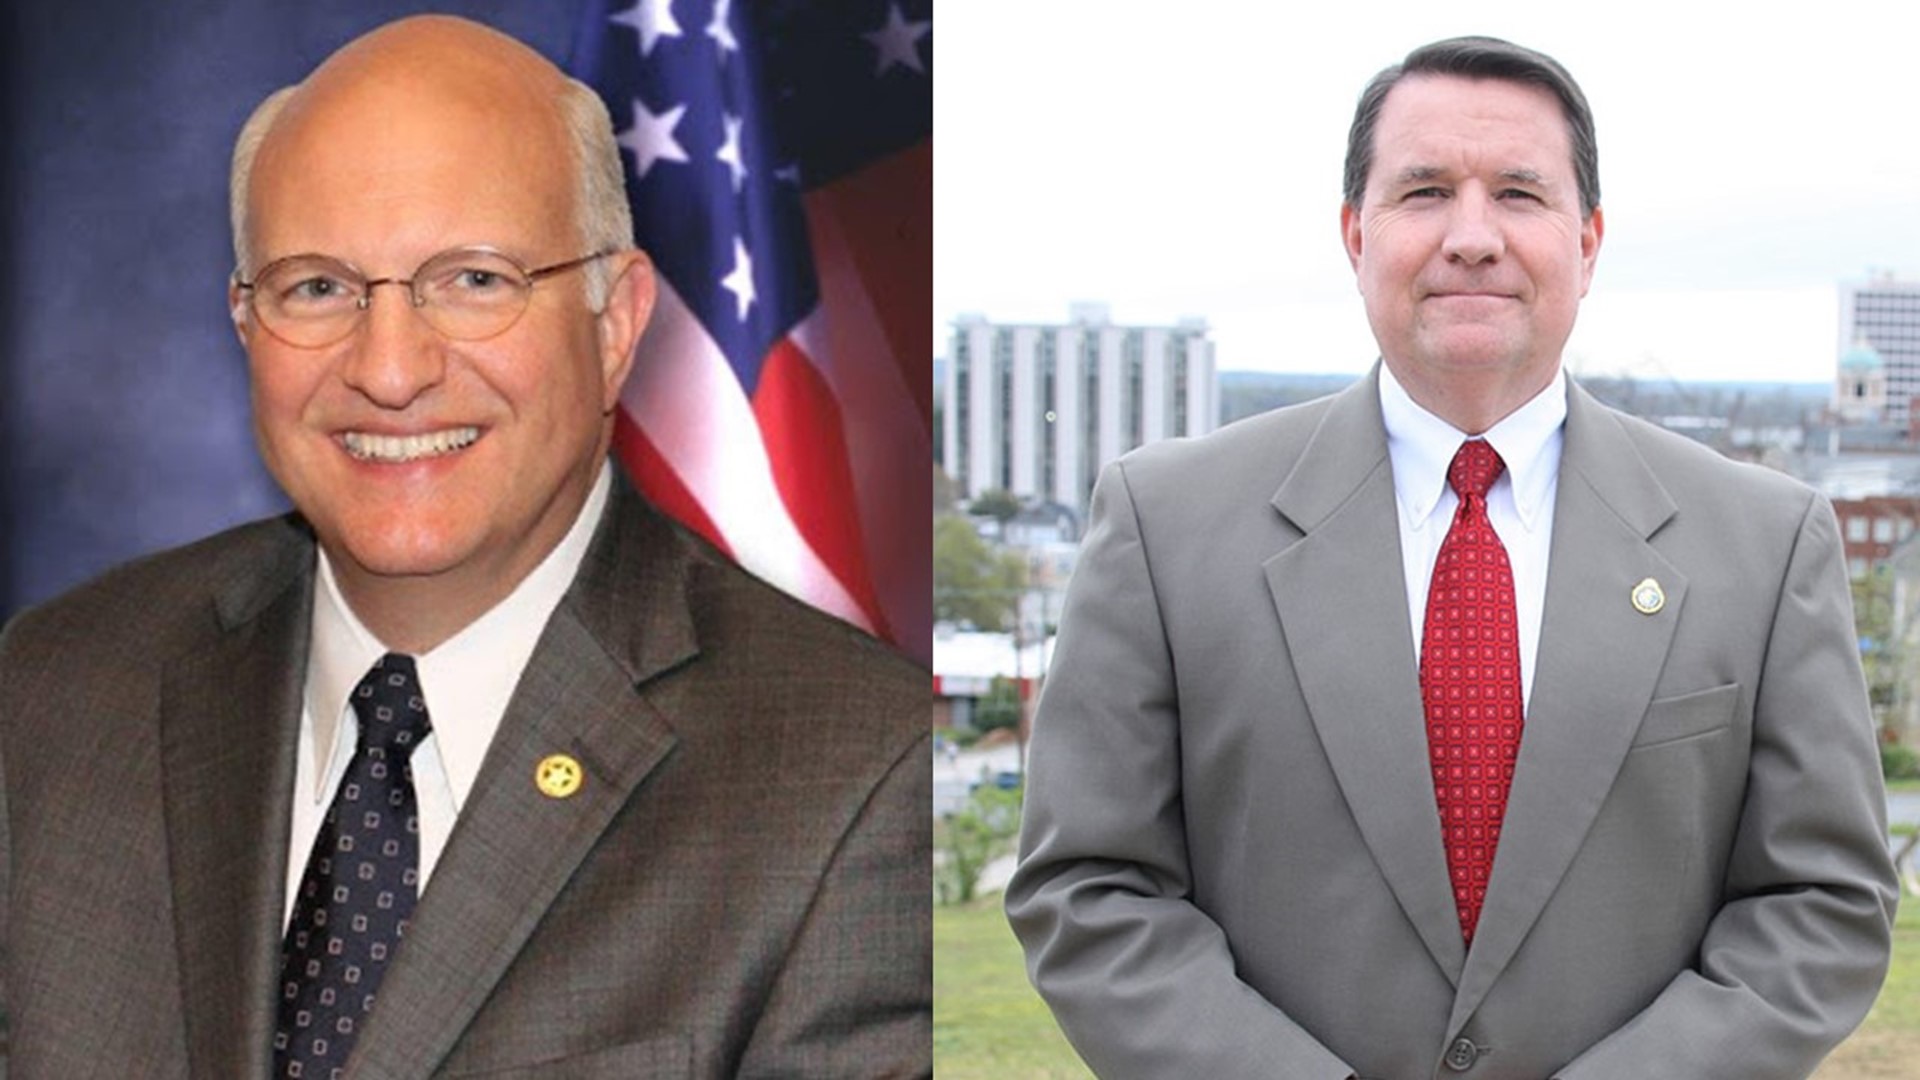 JT Ricketson is challenging Incumbent David Davis for Bibb County Sheriff this November.